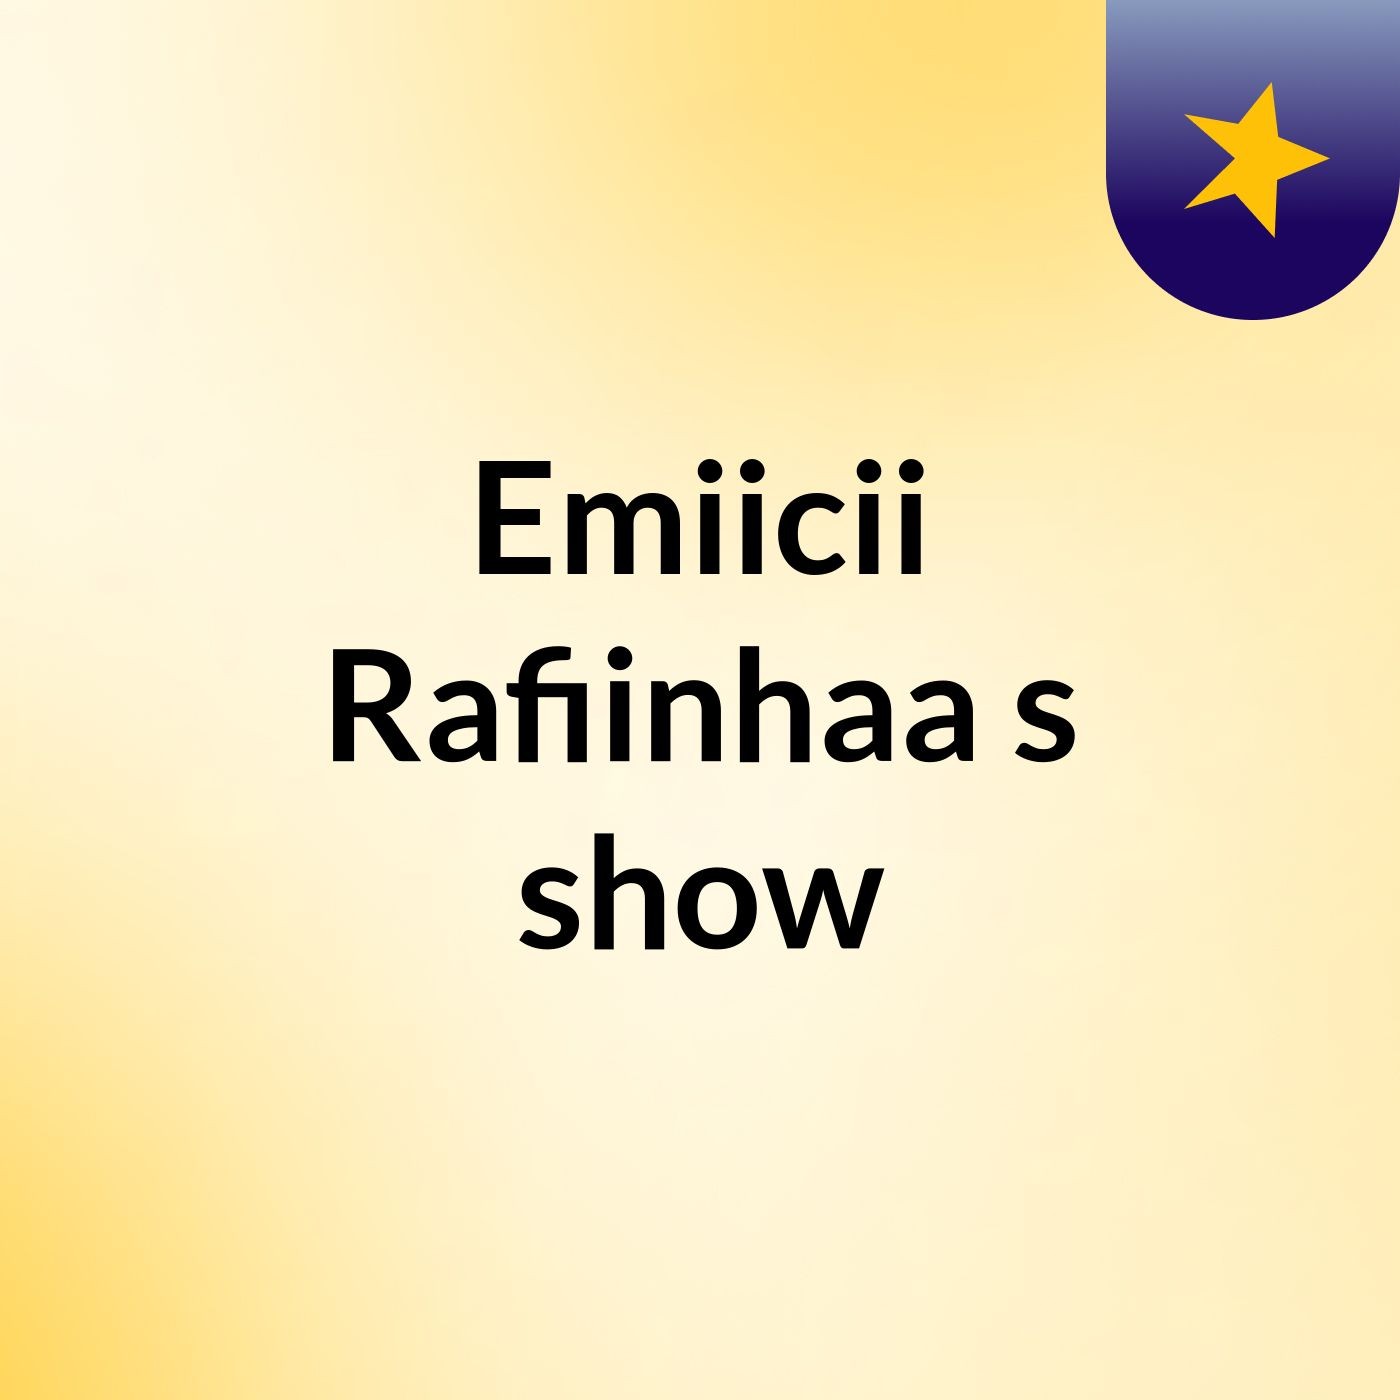 Emiicii Rafiinhaa's show